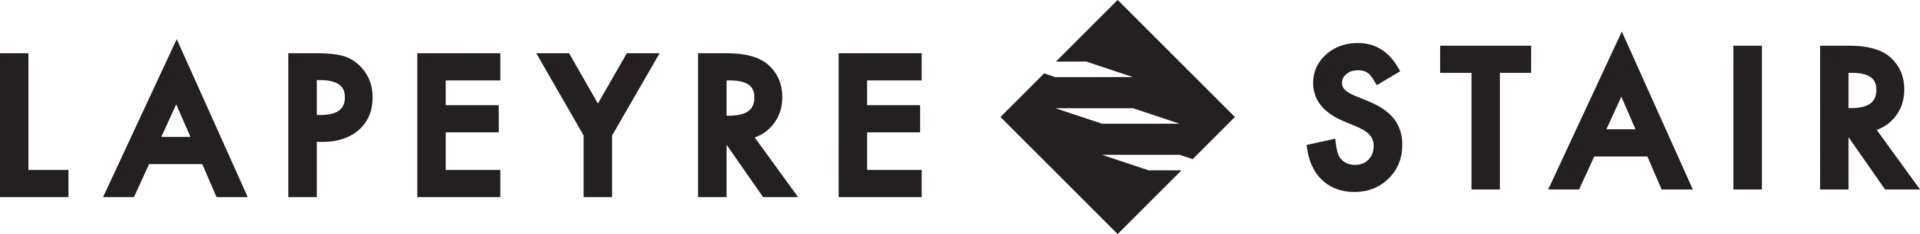 LapeyreStair-logo_K